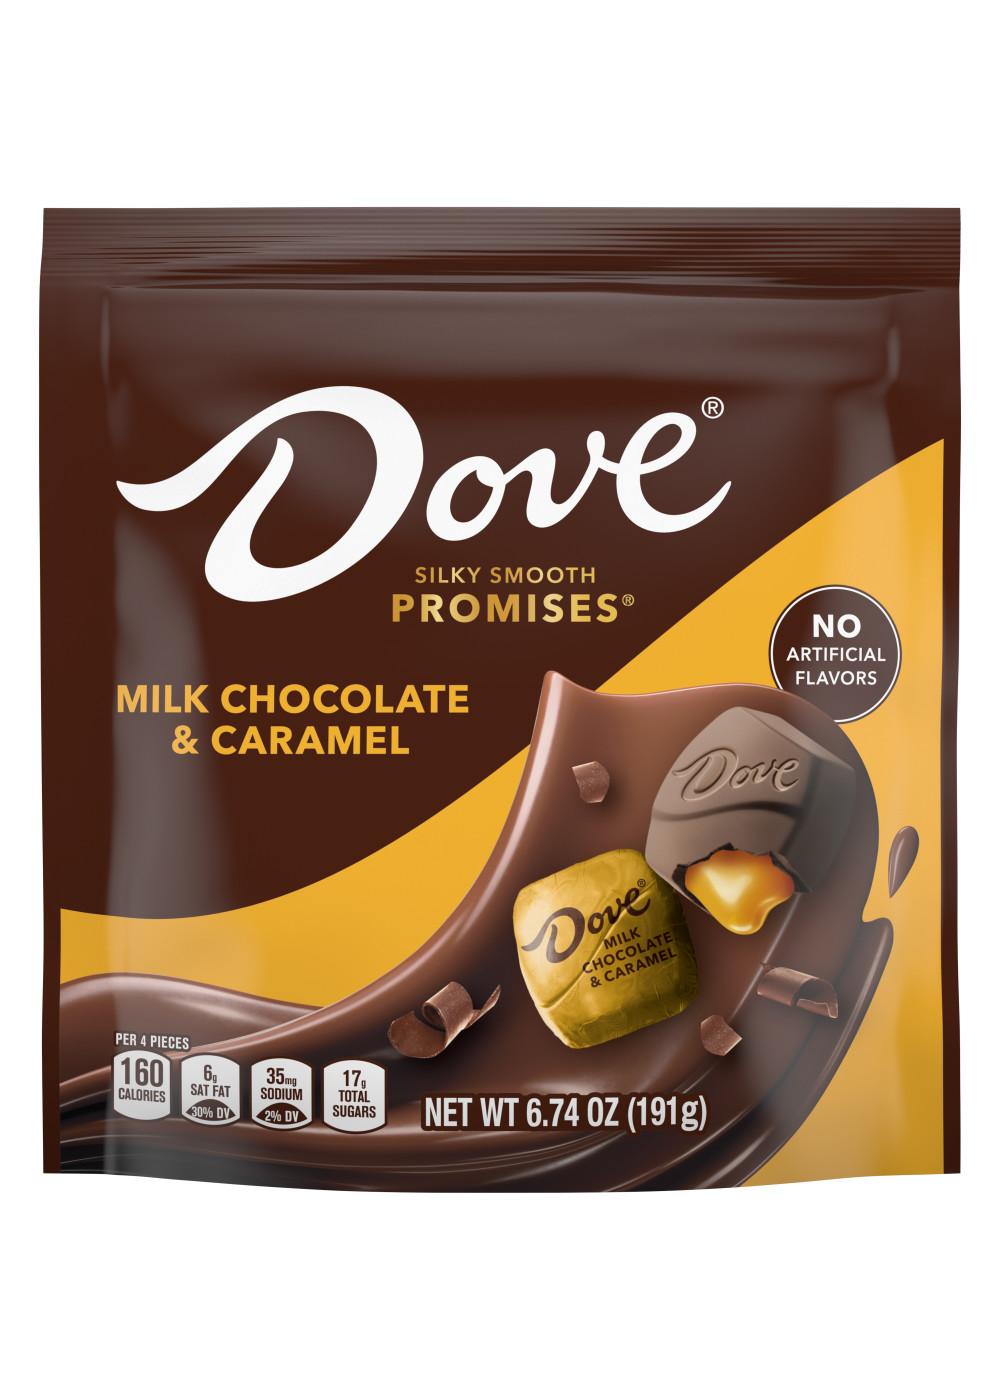 Dove Promises Milk Chocolate & Caramel Candy; image 1 of 7